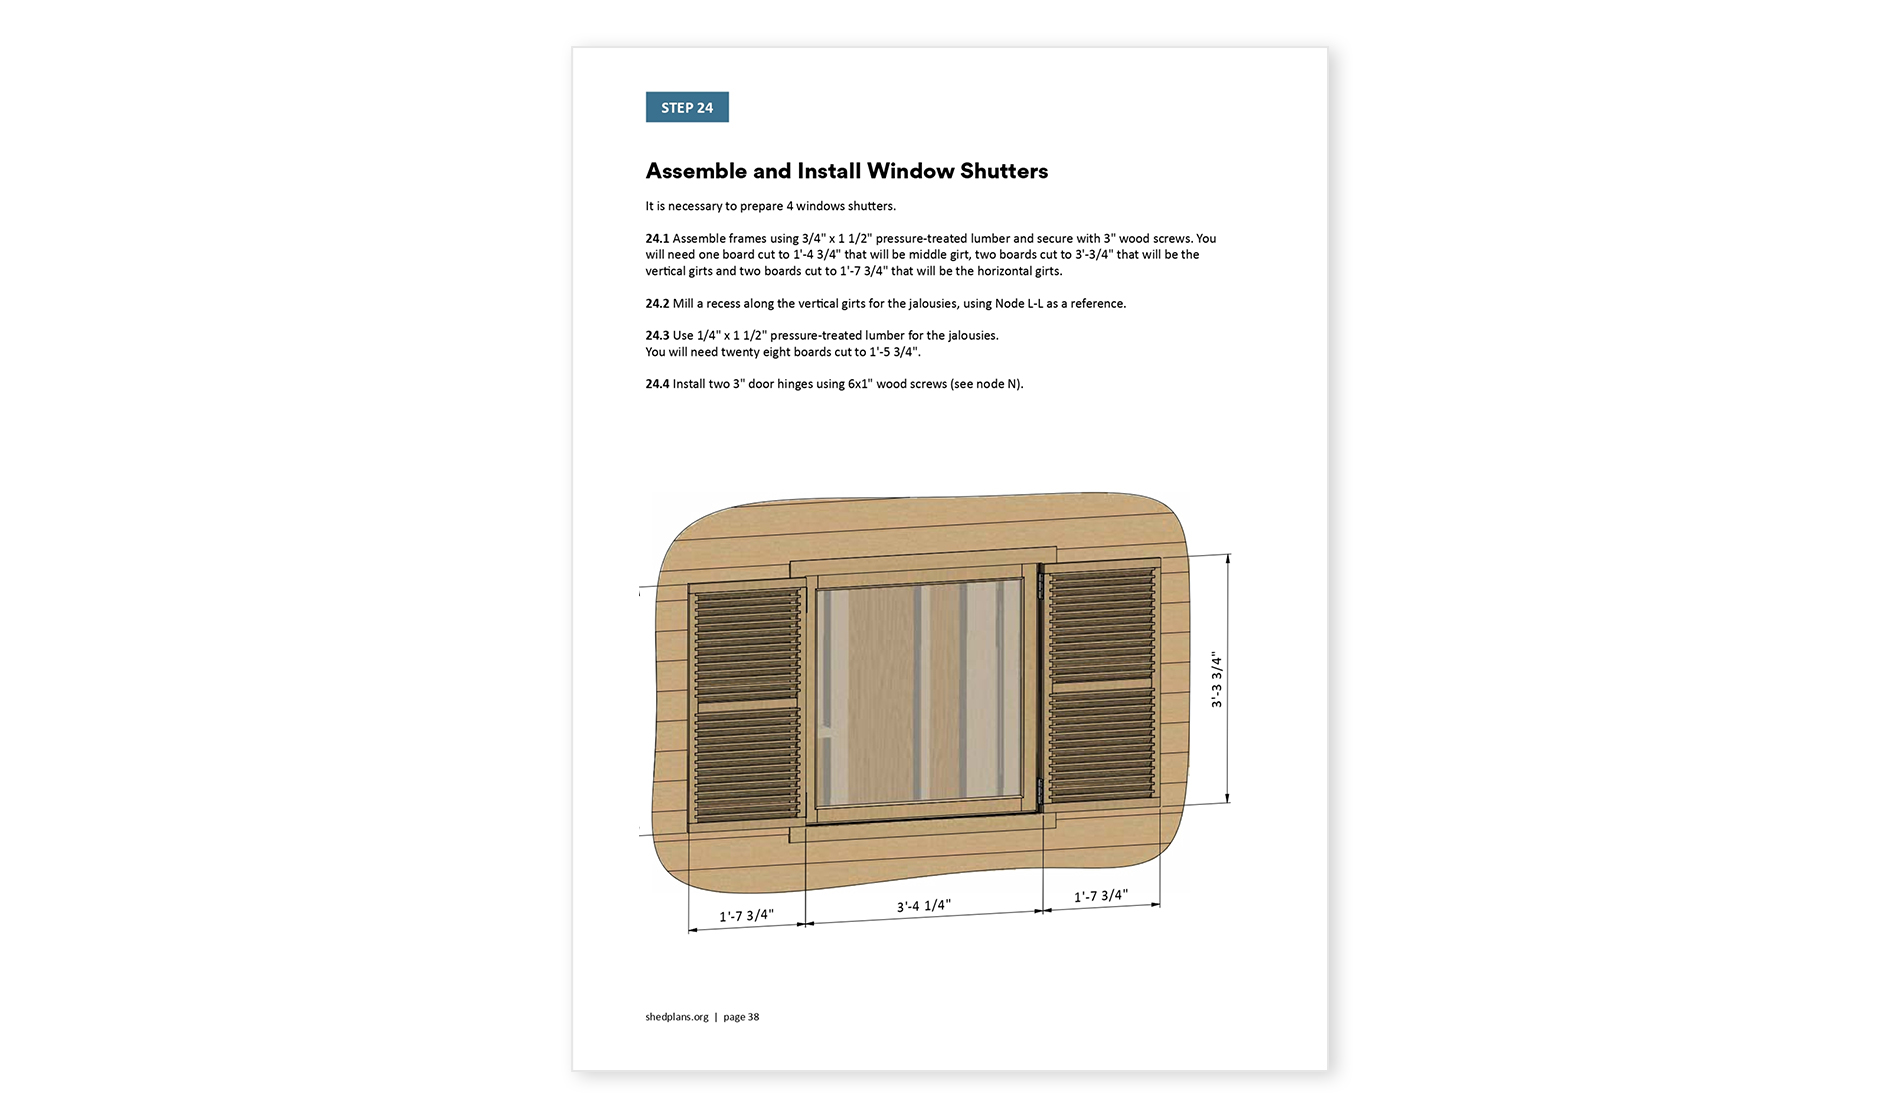 8x8 garden shed window shutters assembly